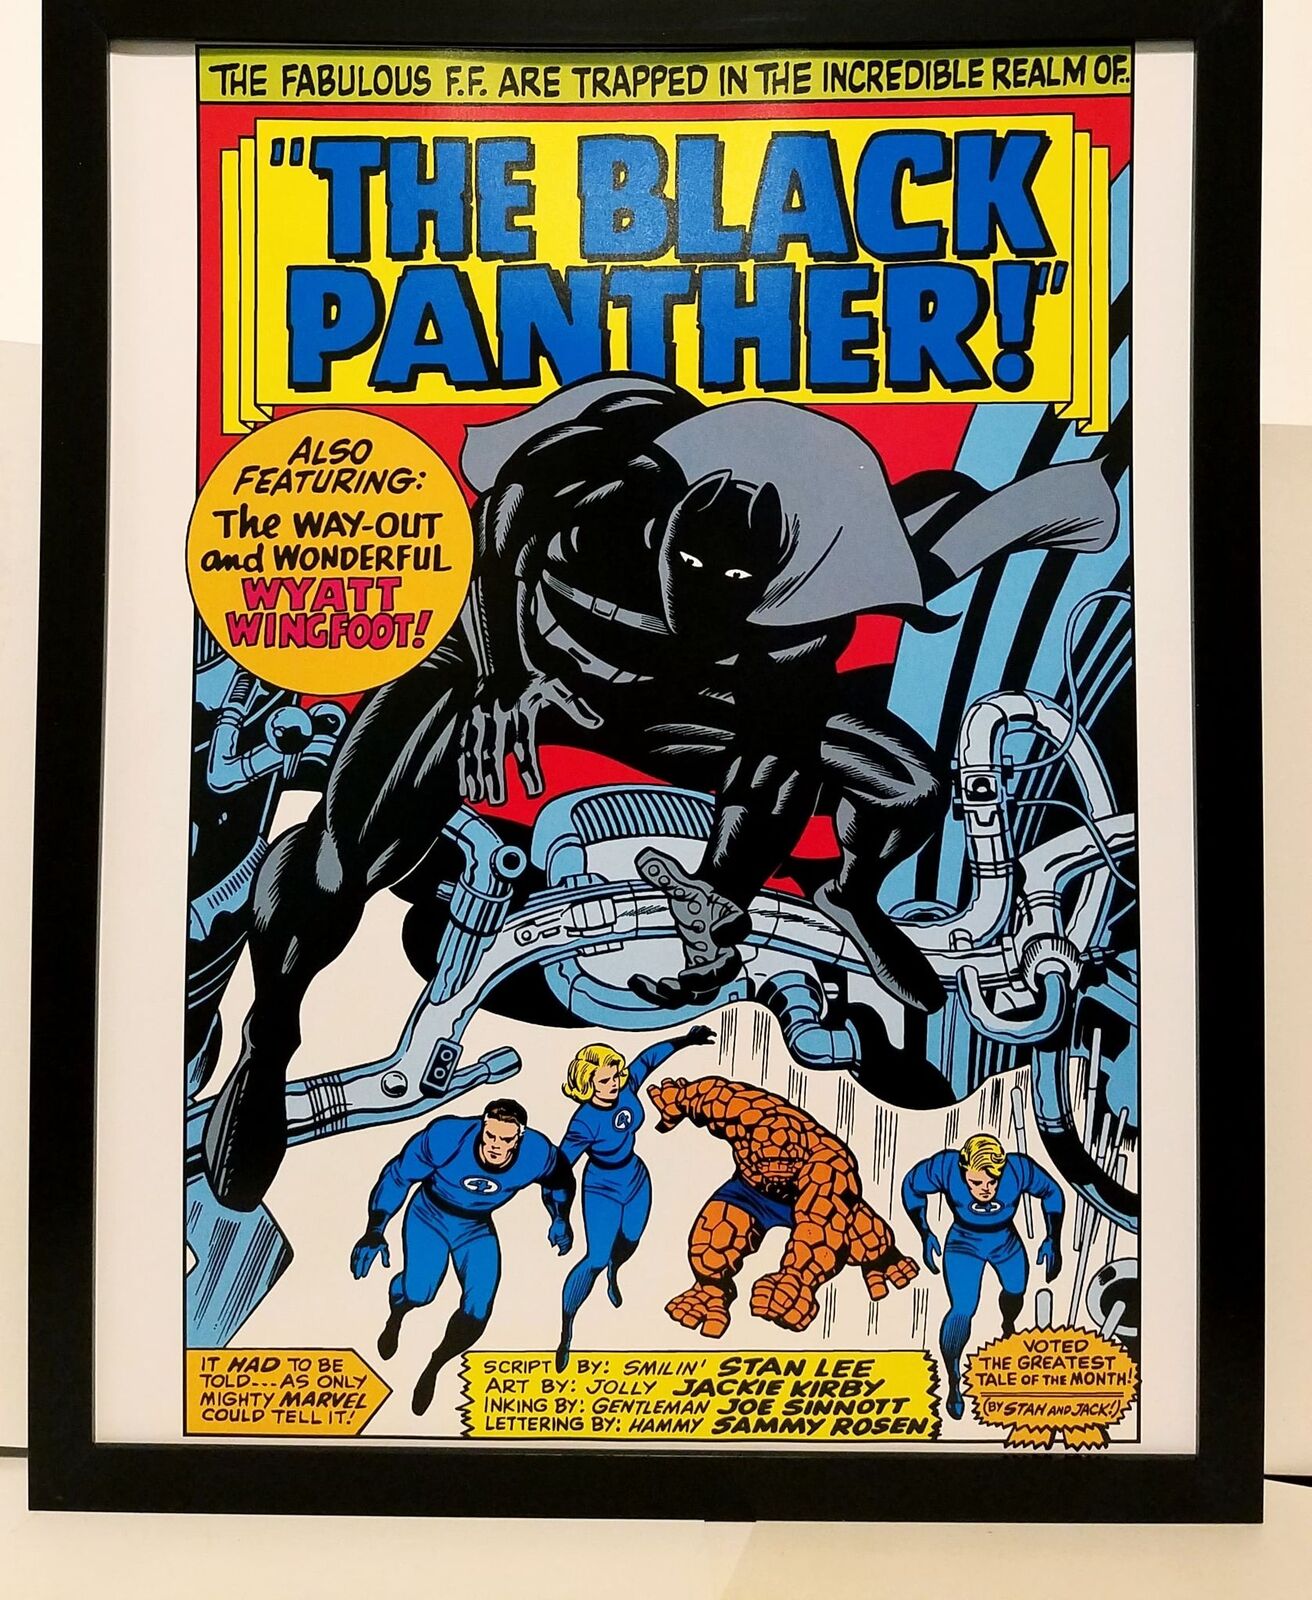 Fantastic Four #52 pg. 1 by Jack Kirby 11x14 FRAMED Marvel Comics Art Print Post